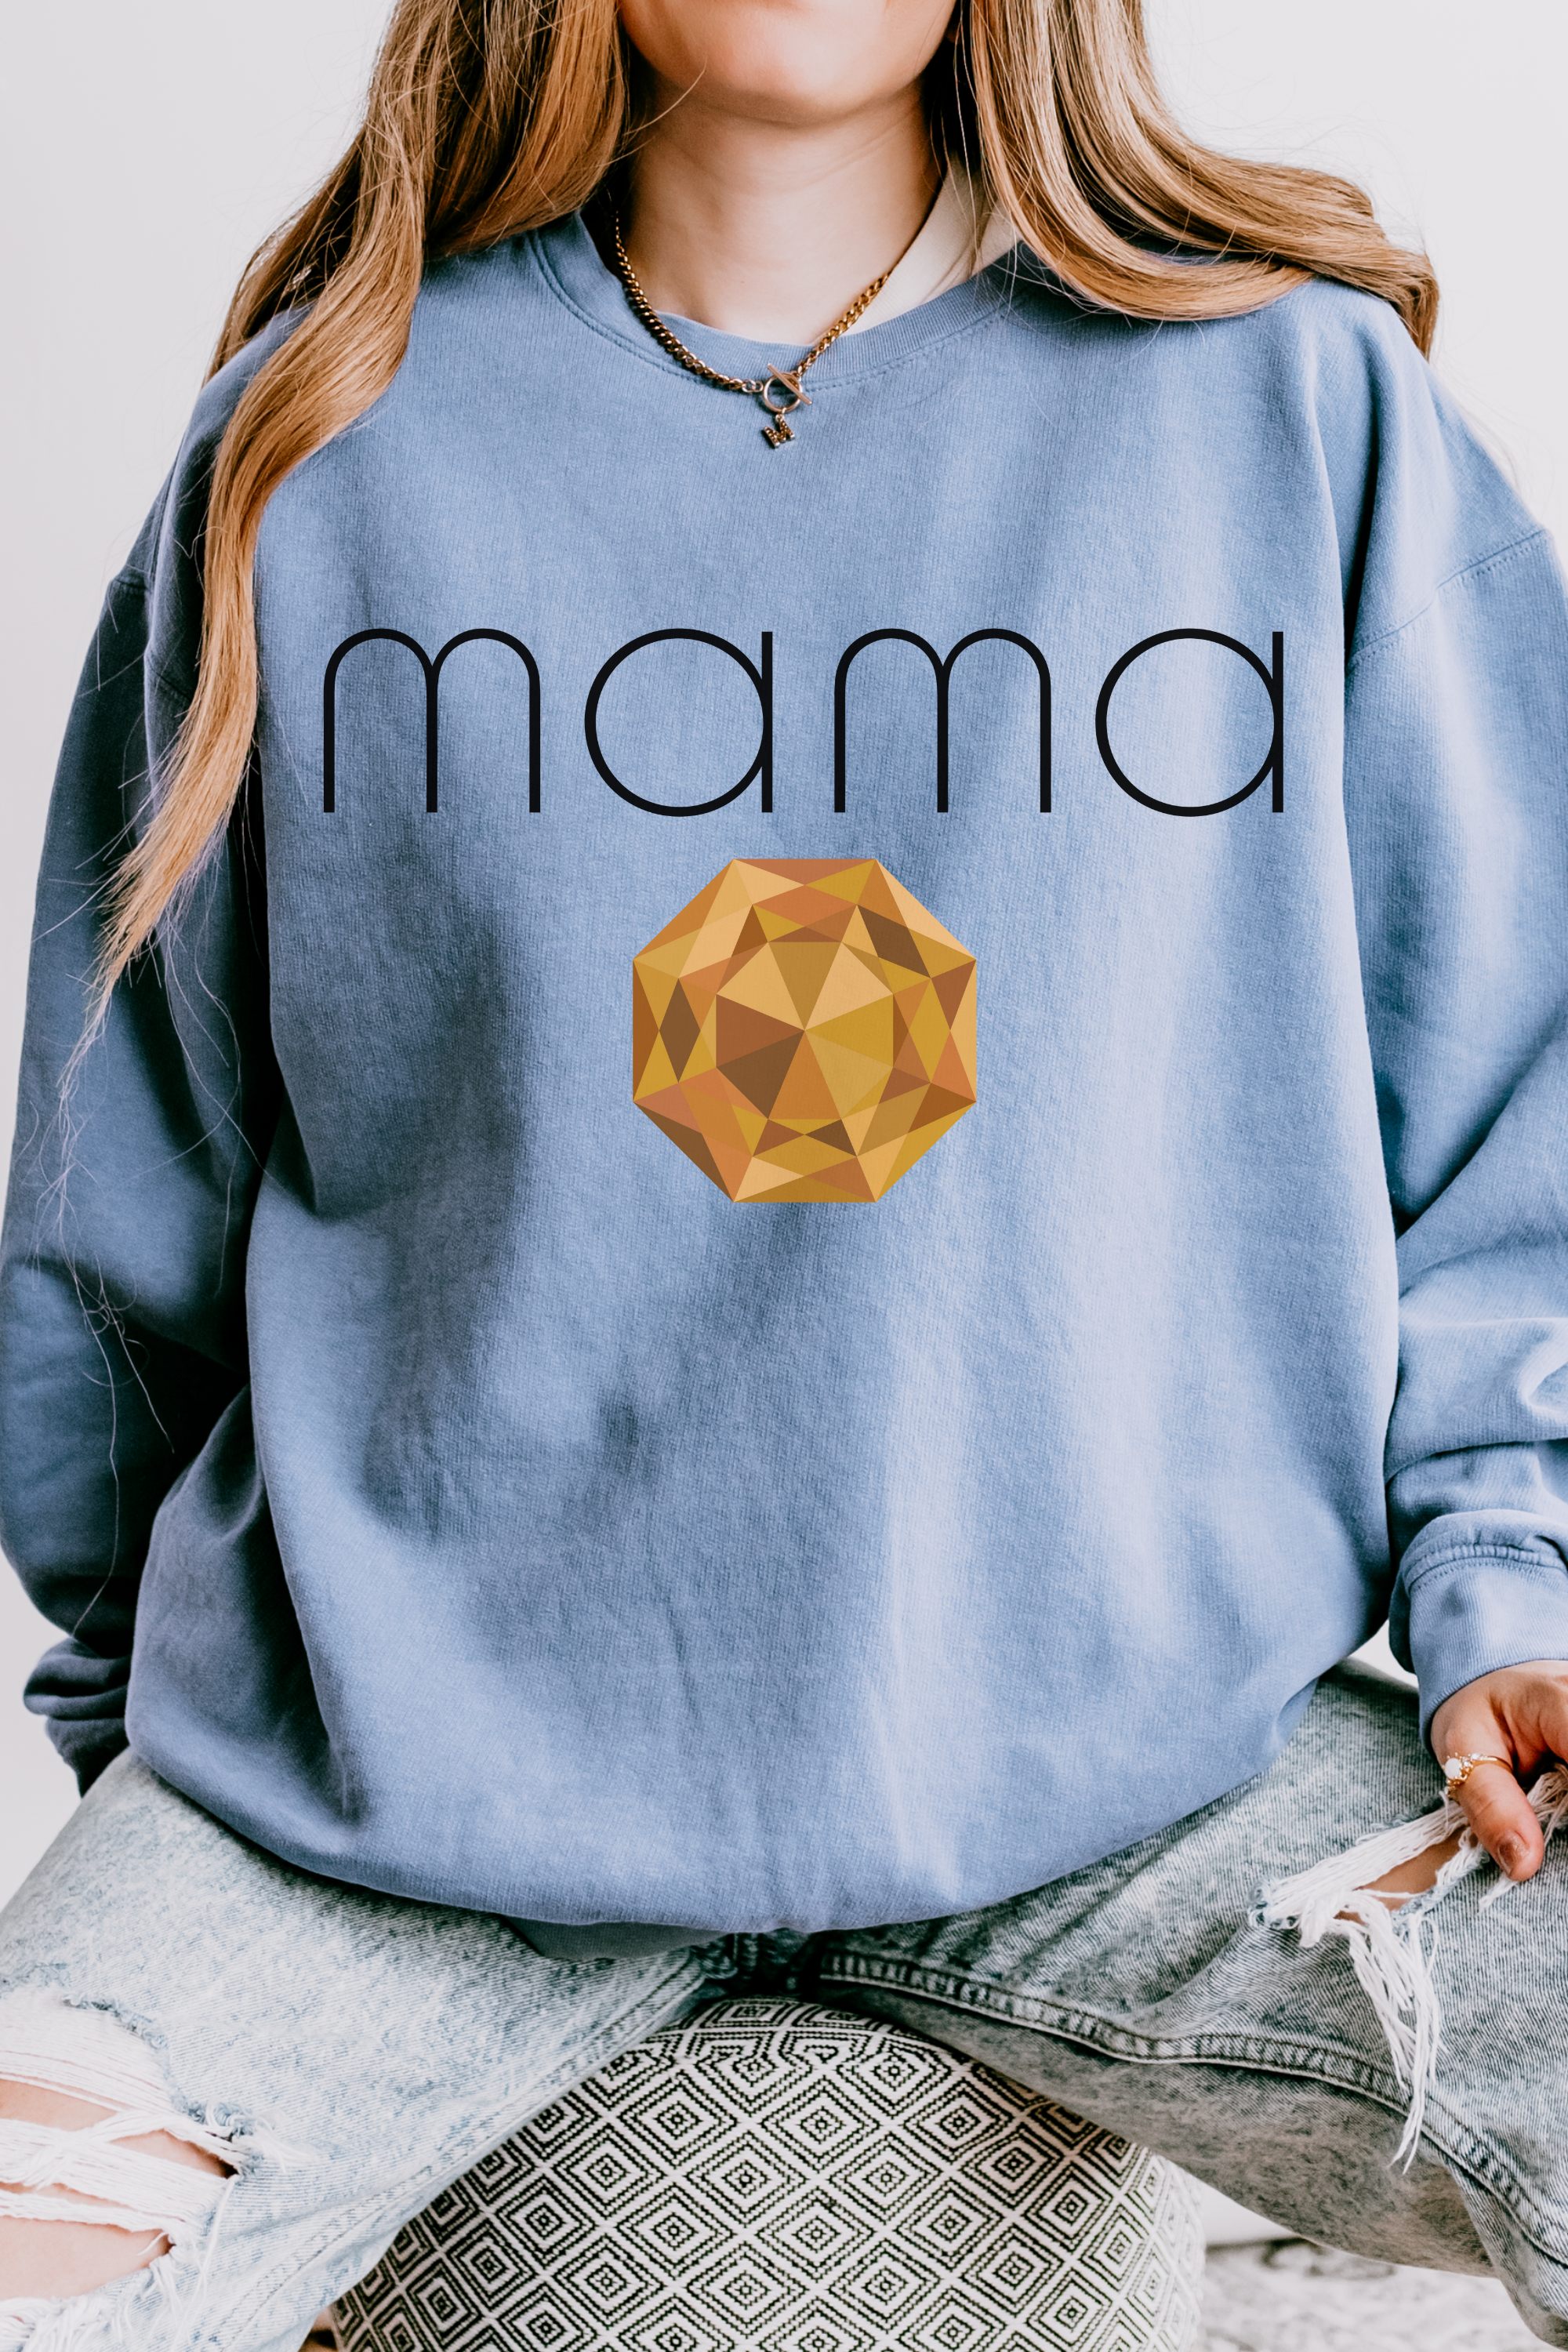 GOLDxTEAL custom mama sweatshirt birthstone topaz.